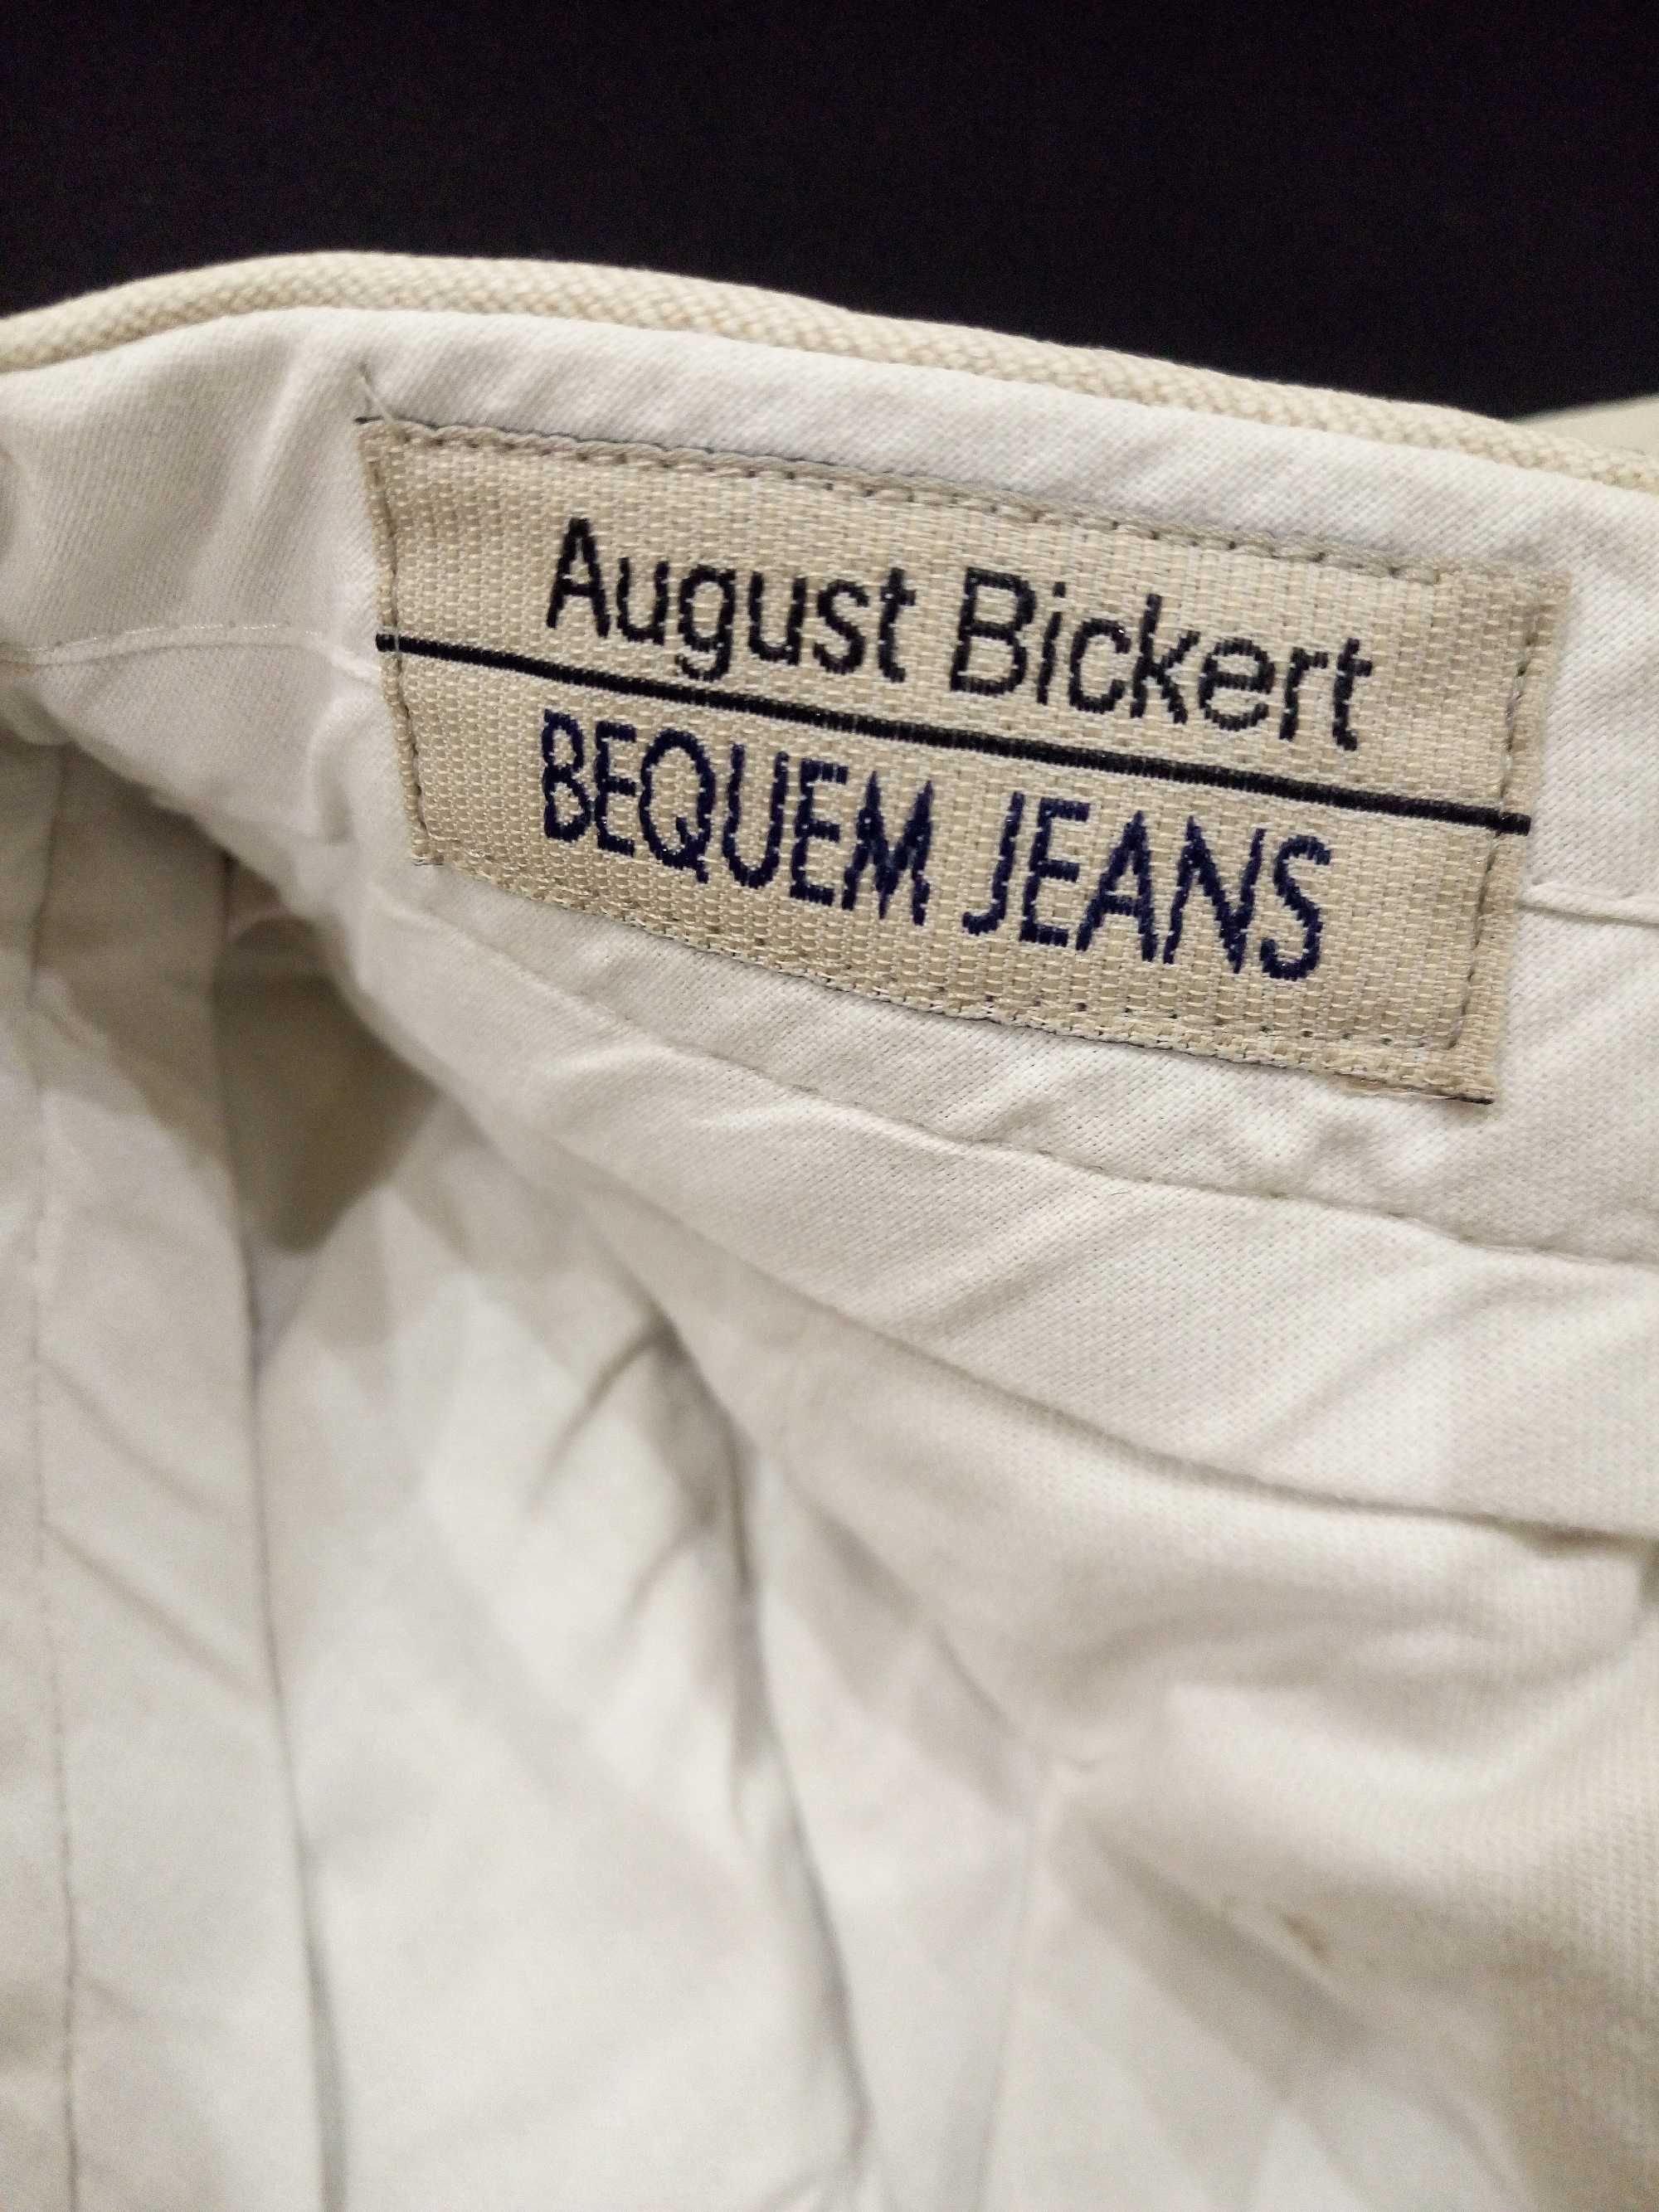 Мужские брюки August Bickert Германия ,джинсы мужские ,штаны